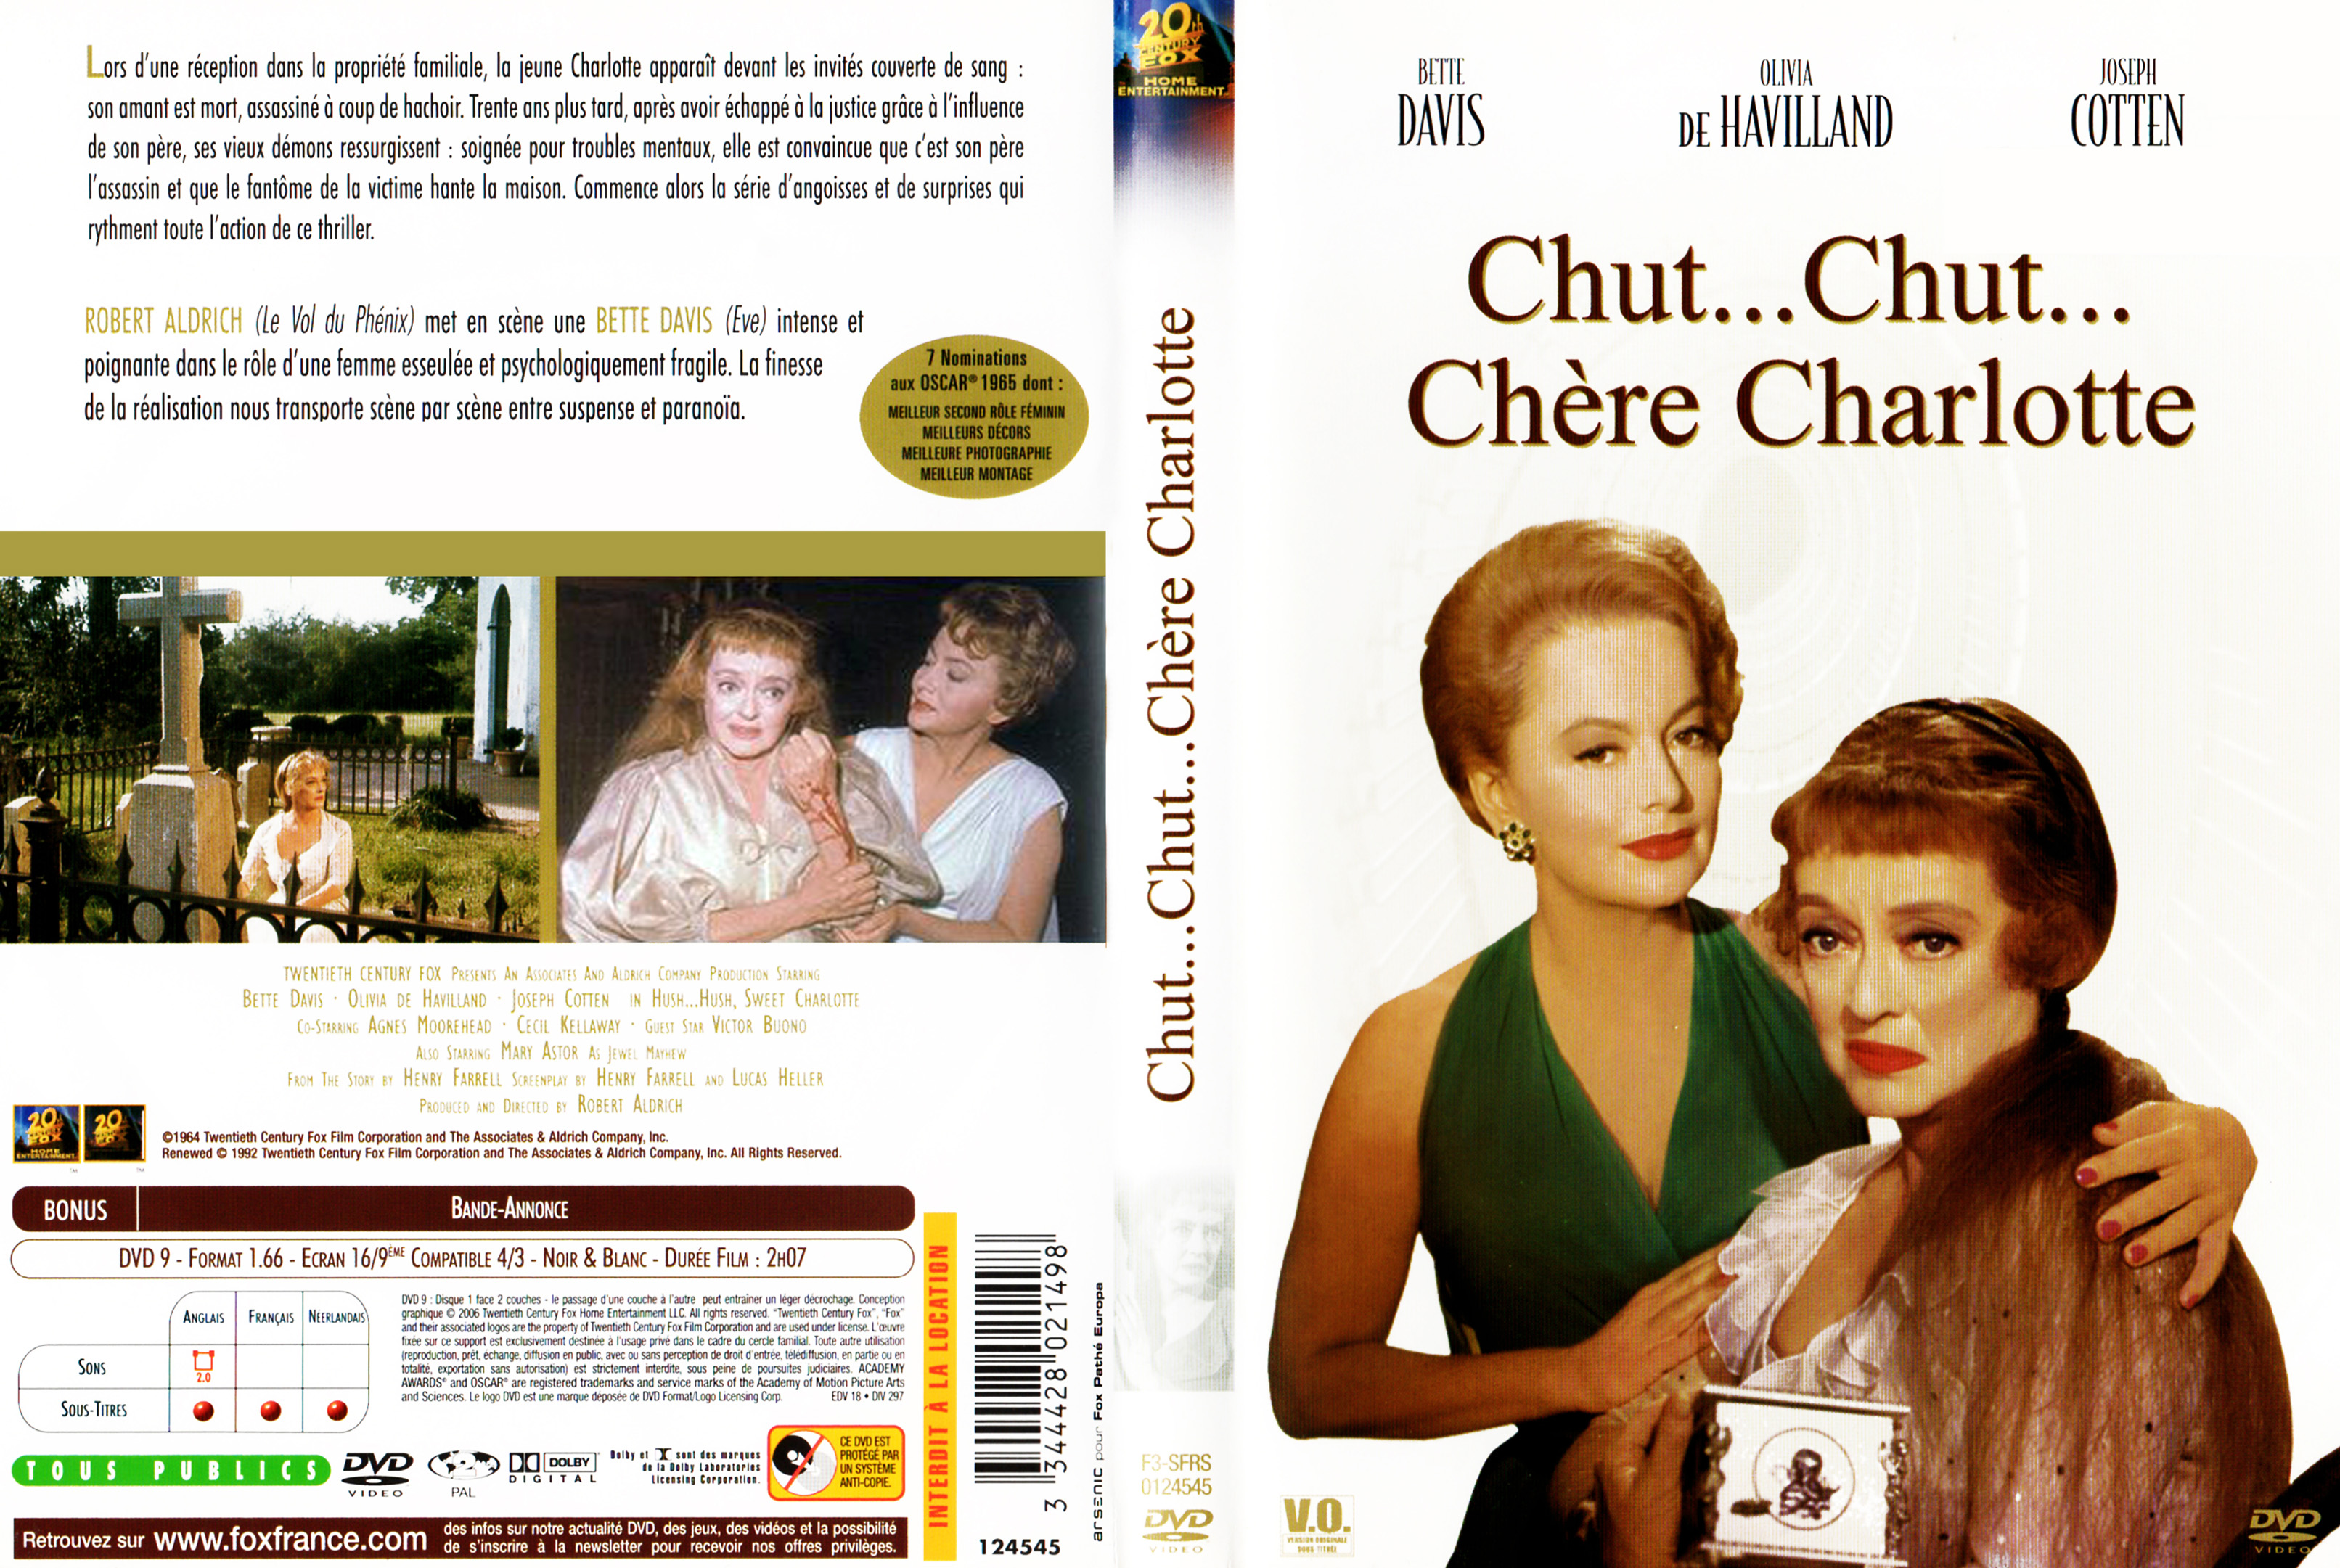 Jaquette DVD Chut chut chere Charlotte